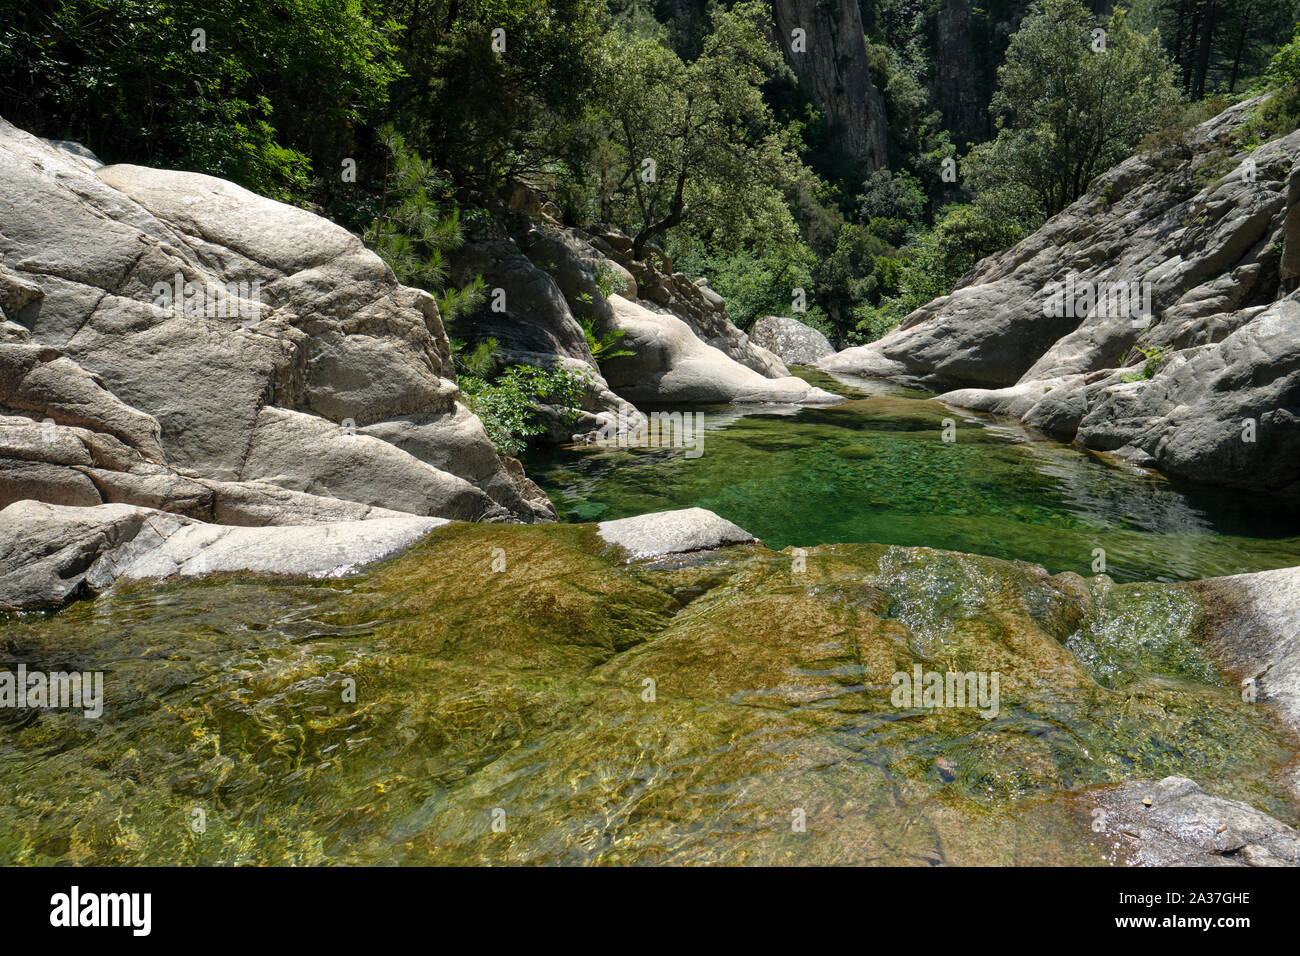 Natürlichen Swimmingpool in der Schlucht des Purcaraccia/Cascades de Purcaraccia, Bavella Gebirge, Korsika Frankreich - Korsika Berge Canyon Landschaft. Stockfoto